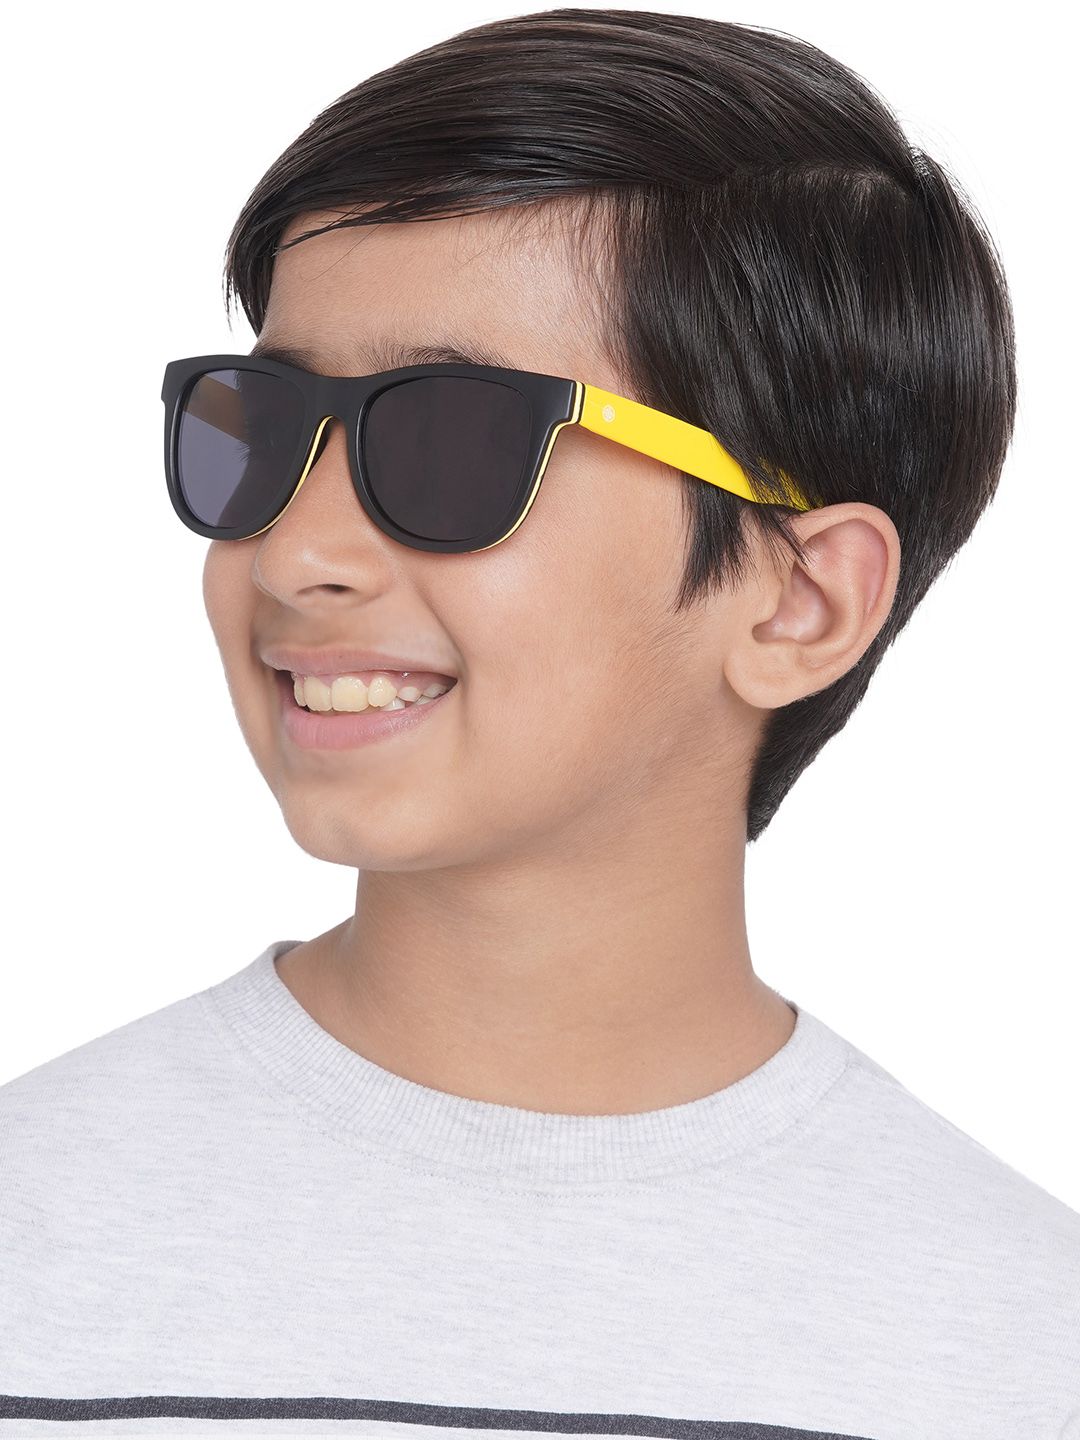 Buy Carlton London Carlton London Boys Black Lens & Yellow Wayfarer  Sunglasses at Redfynd